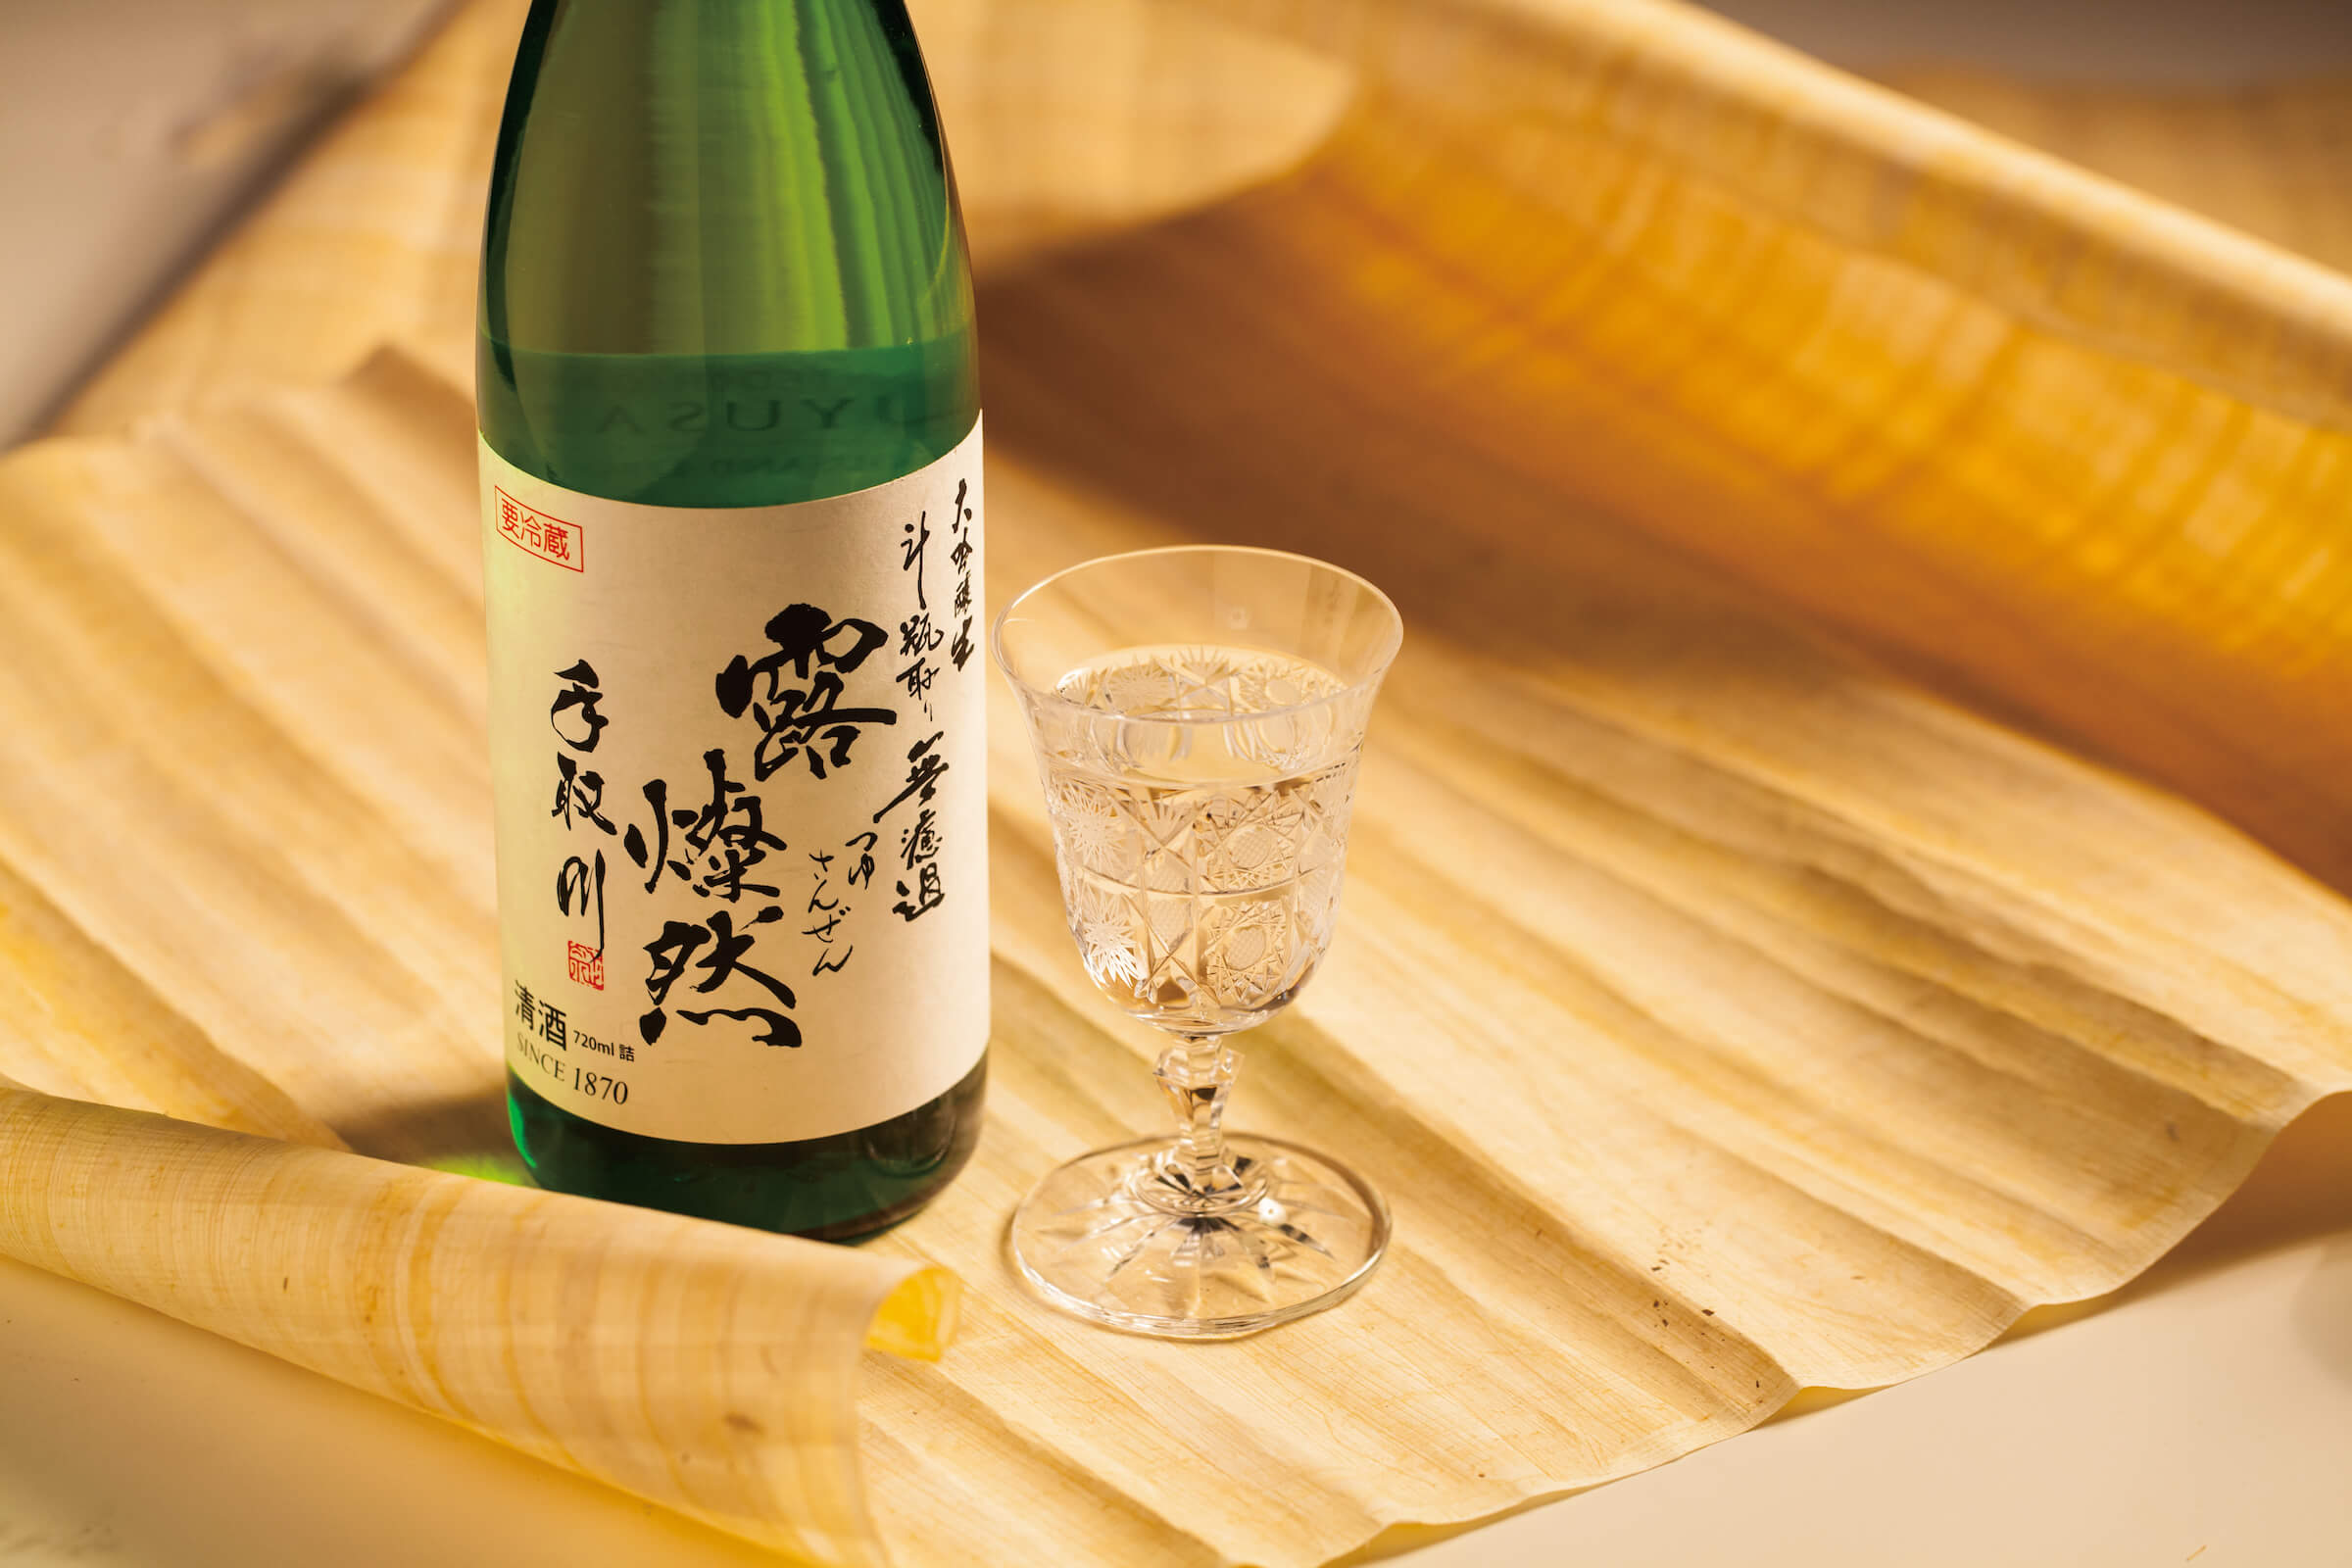 Tedorigawa “Tsuyusanzen” bottle